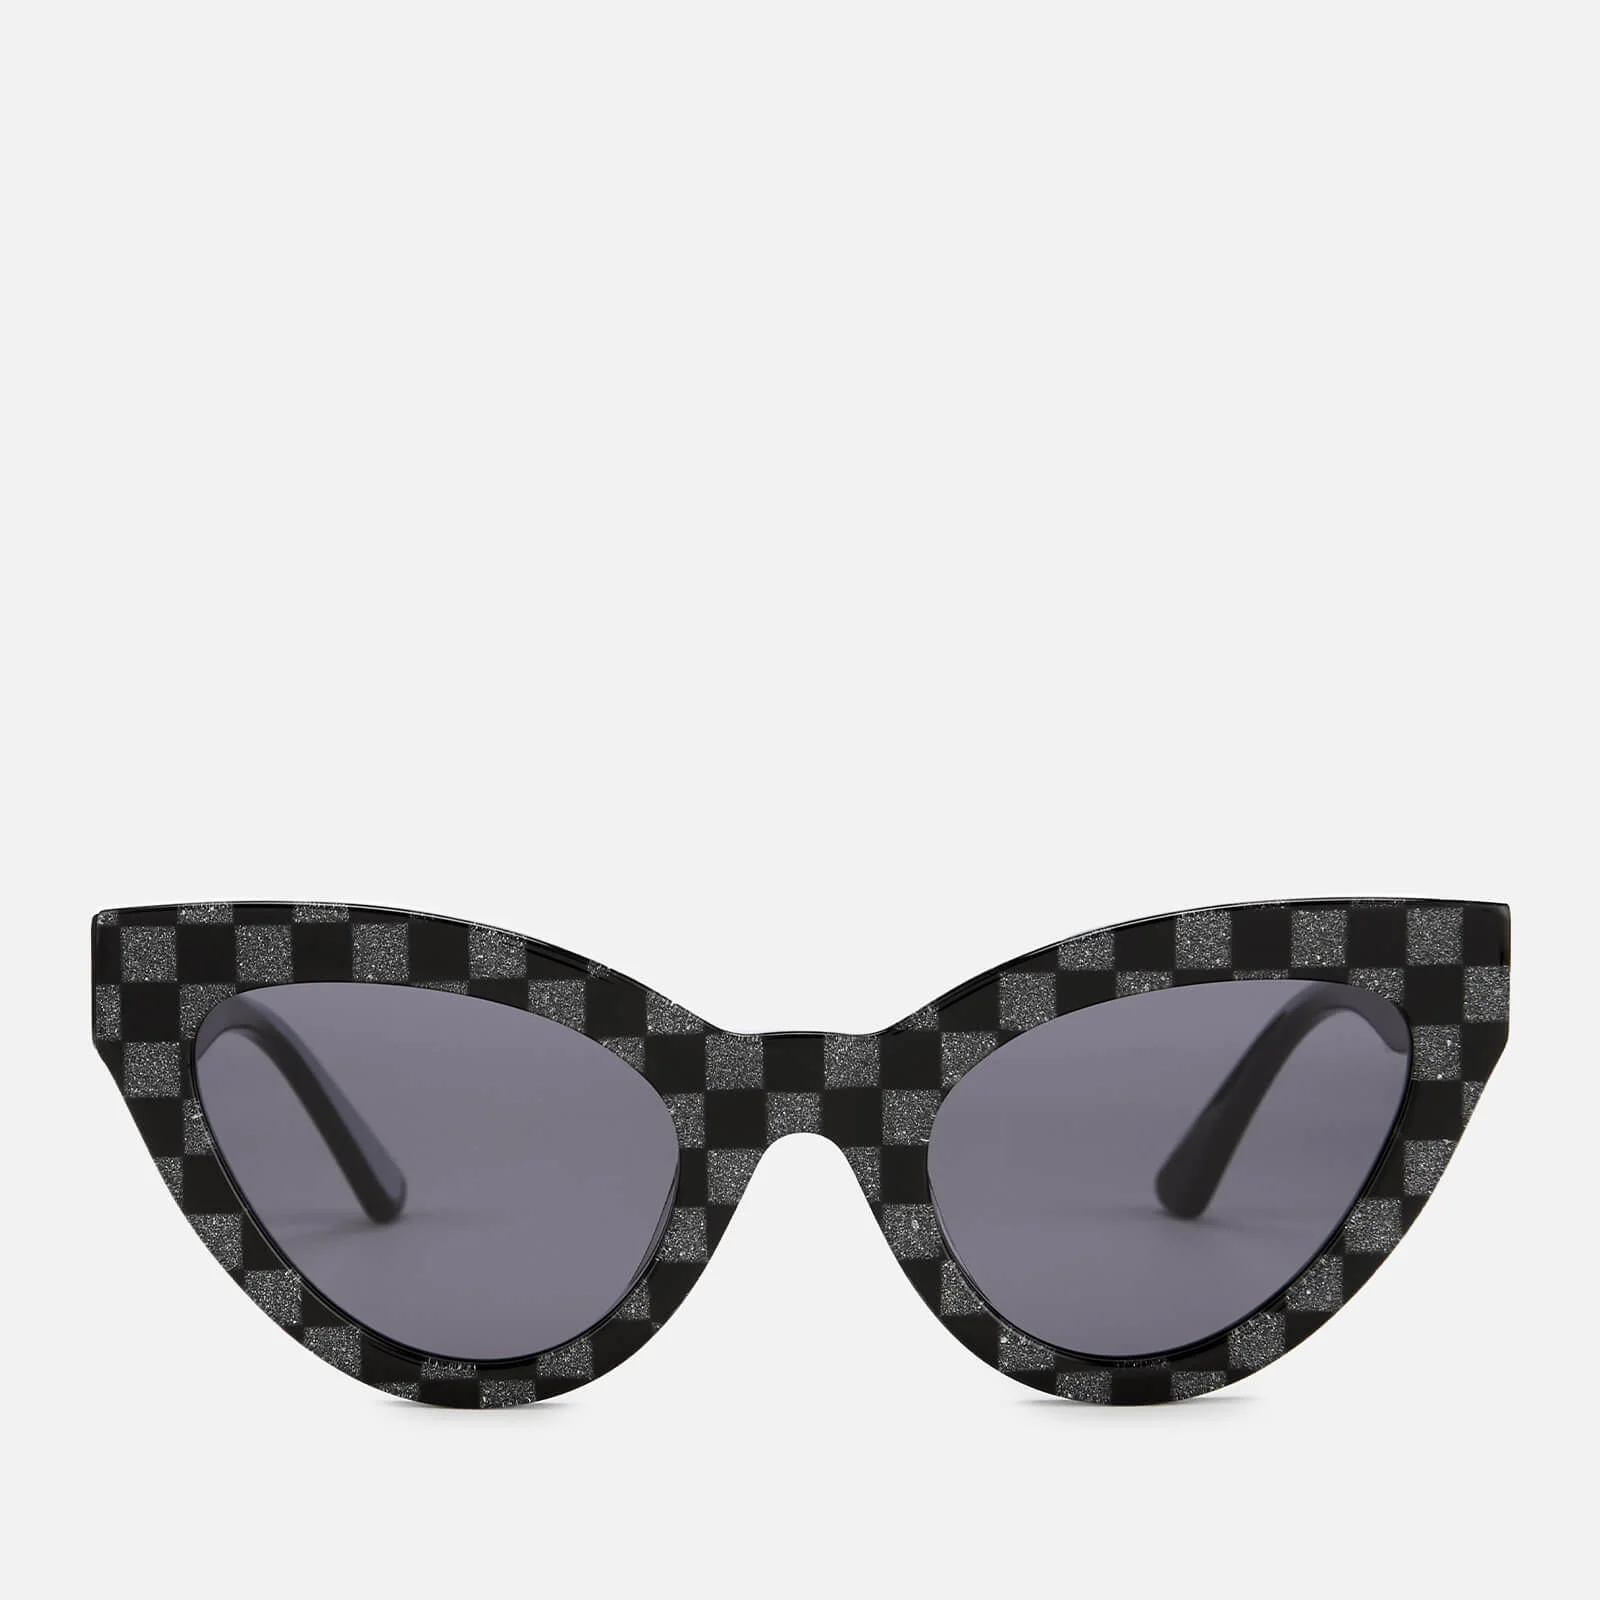 McQ Alexander McQueen Women's Printed Cat-Eye Frame Sunglasses - Black Image 1